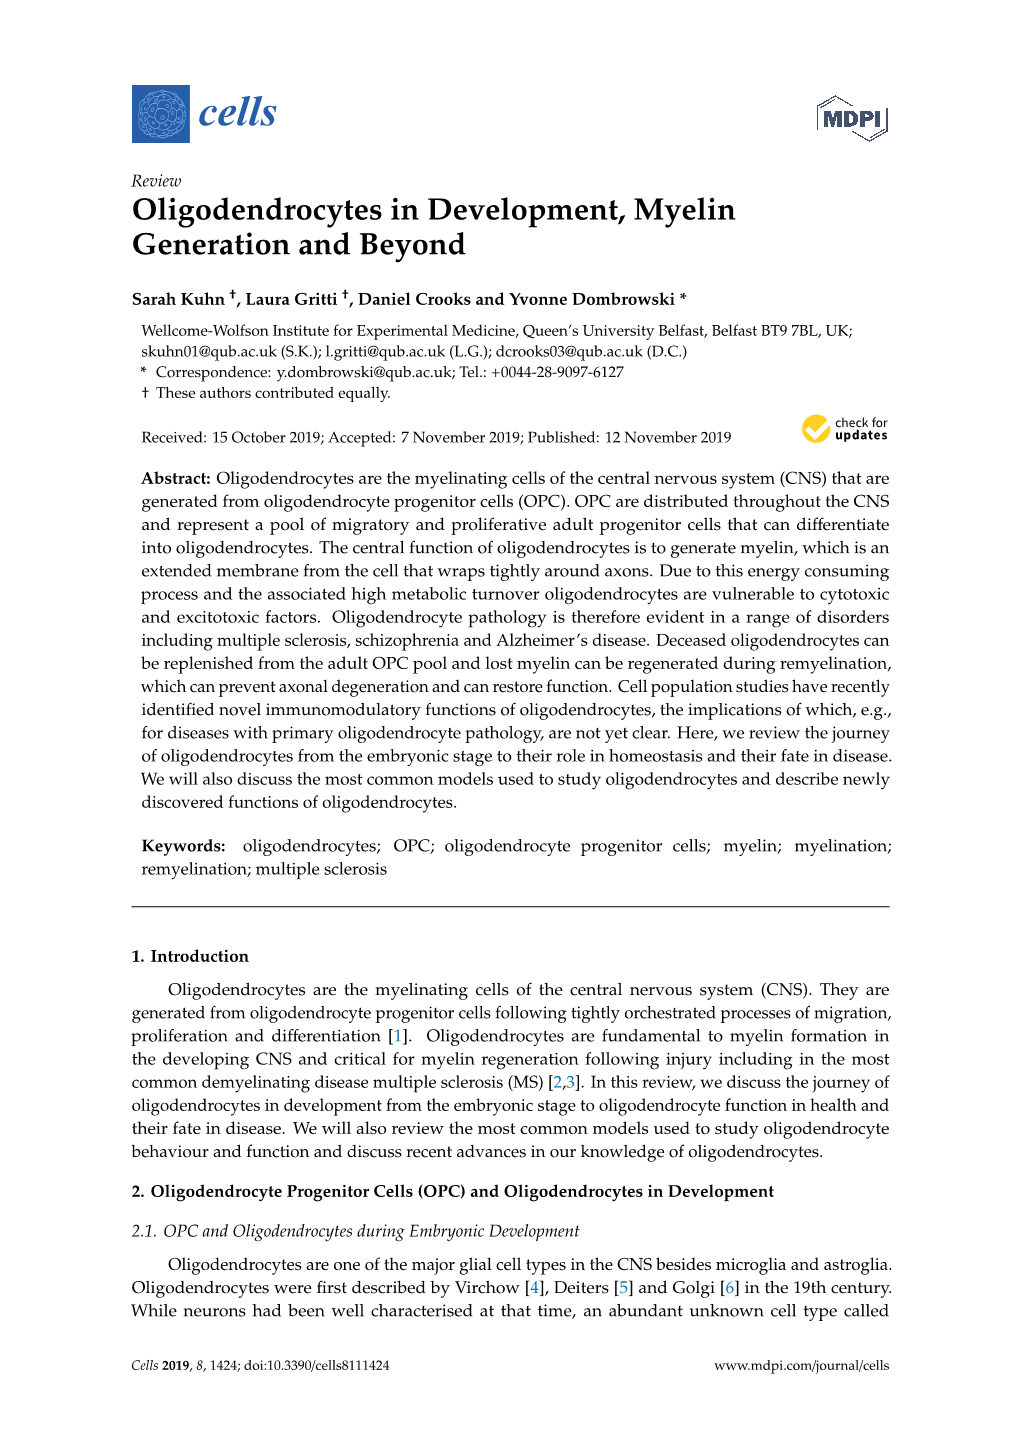 Oligodendrocytes in Development, Myelin Generation and Beyond